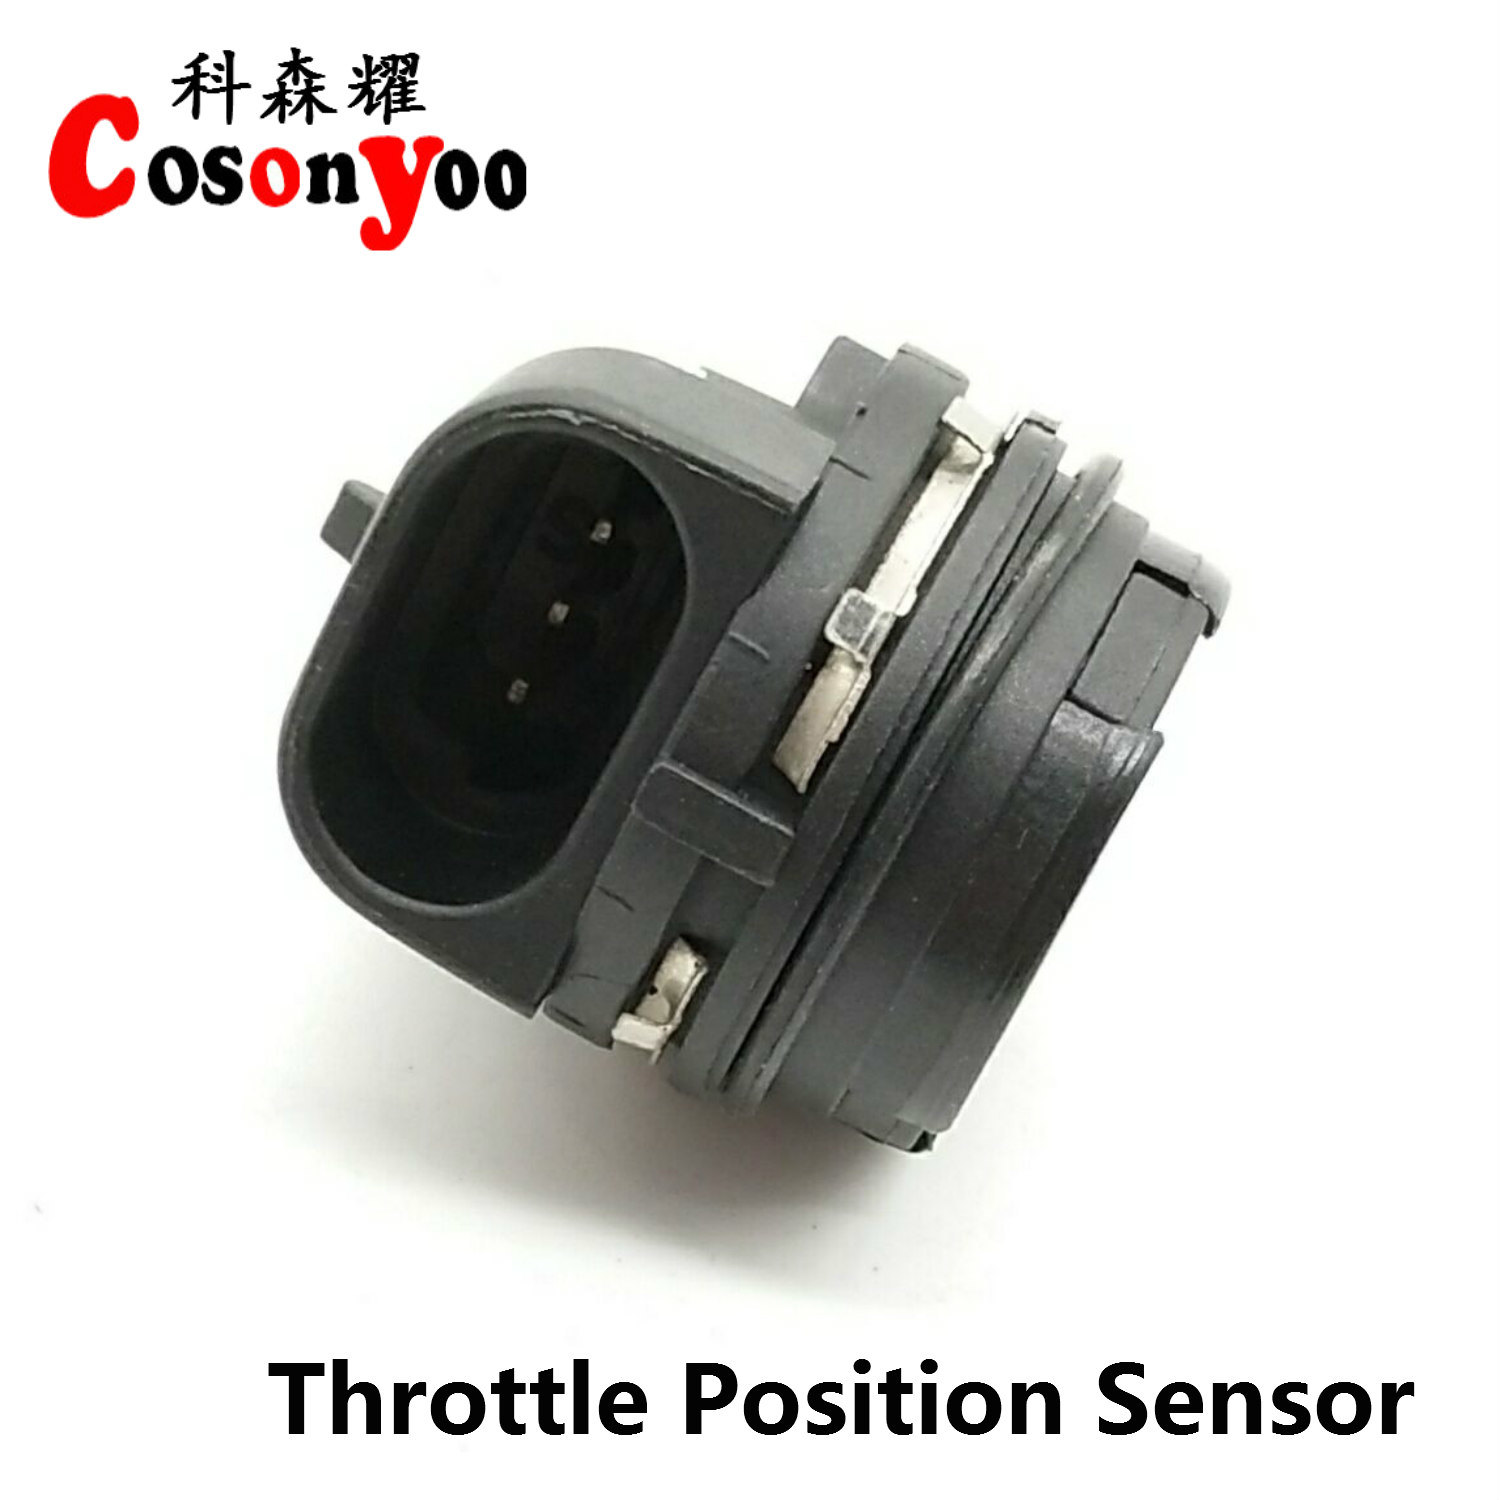 Throttle Position Sensor, OEM: Tpf20. Chery Ma Ruili Series